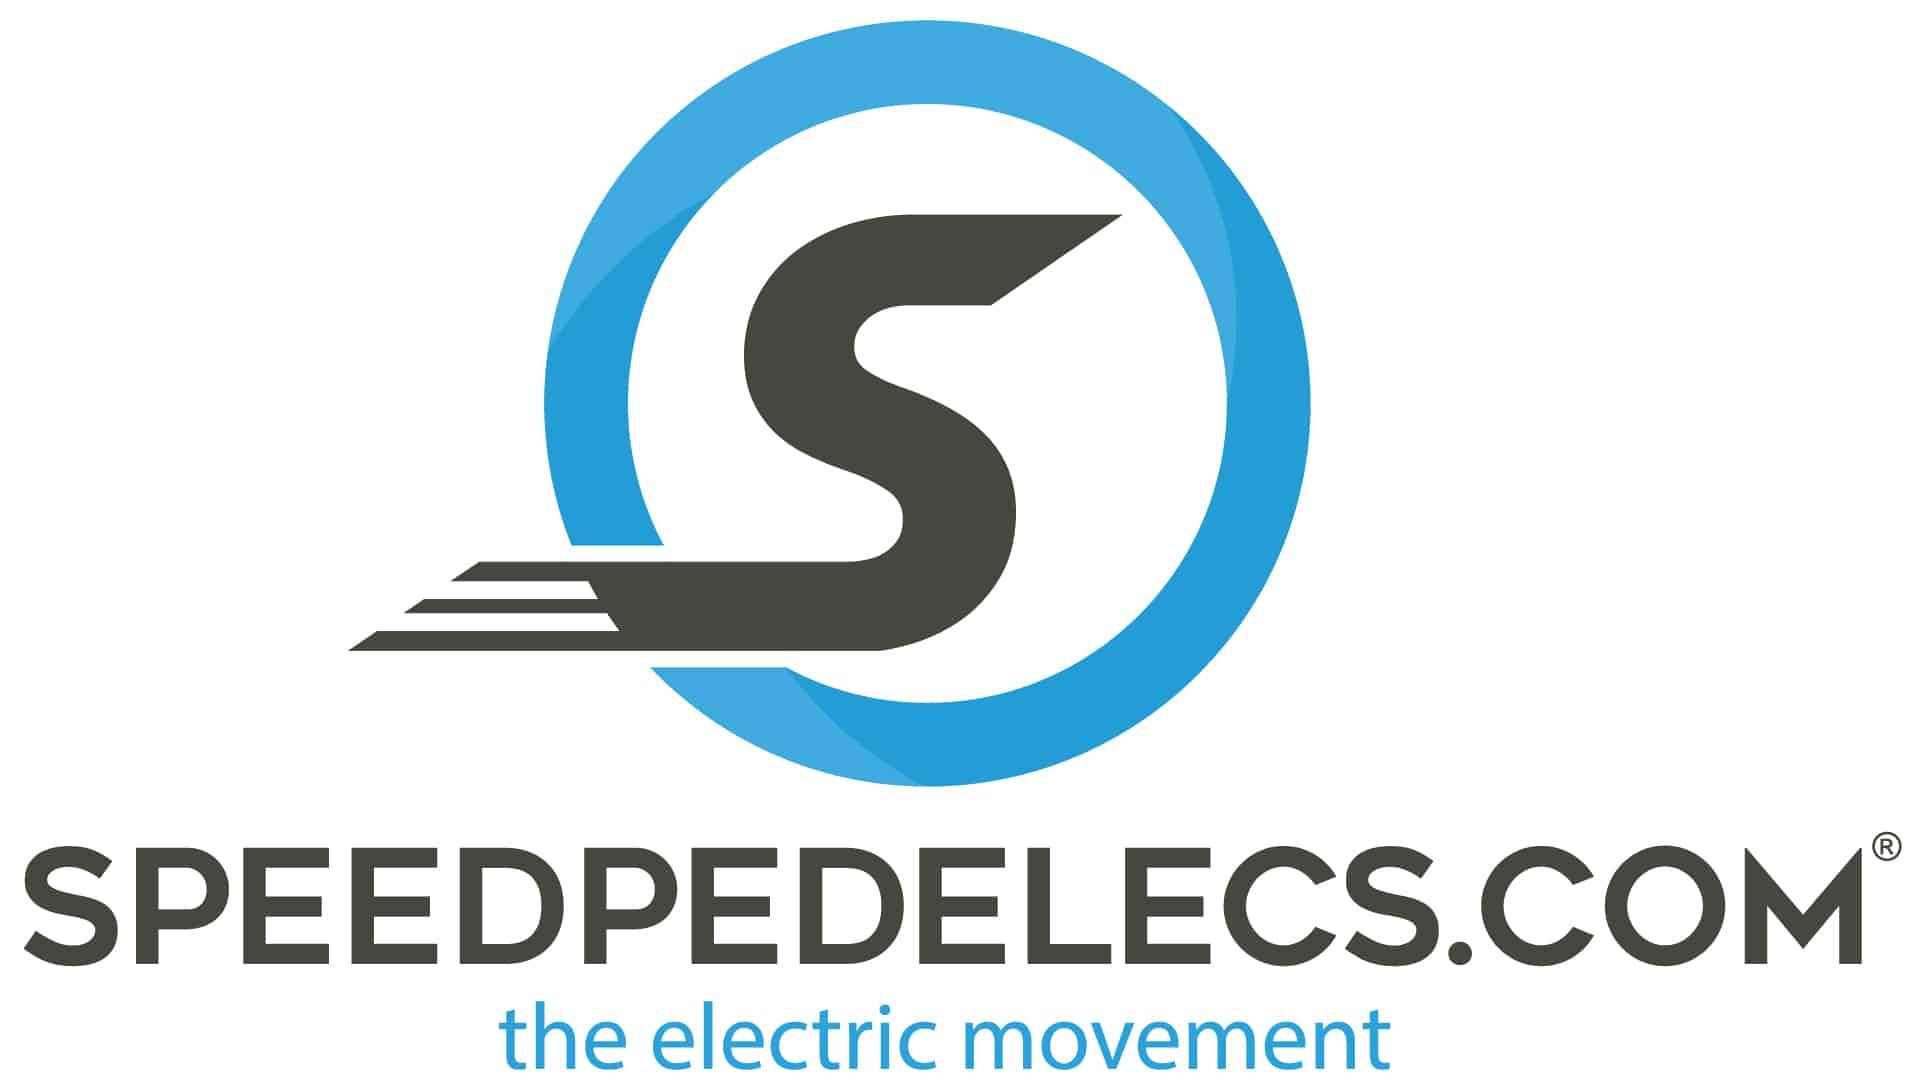 speedpedelecs.com